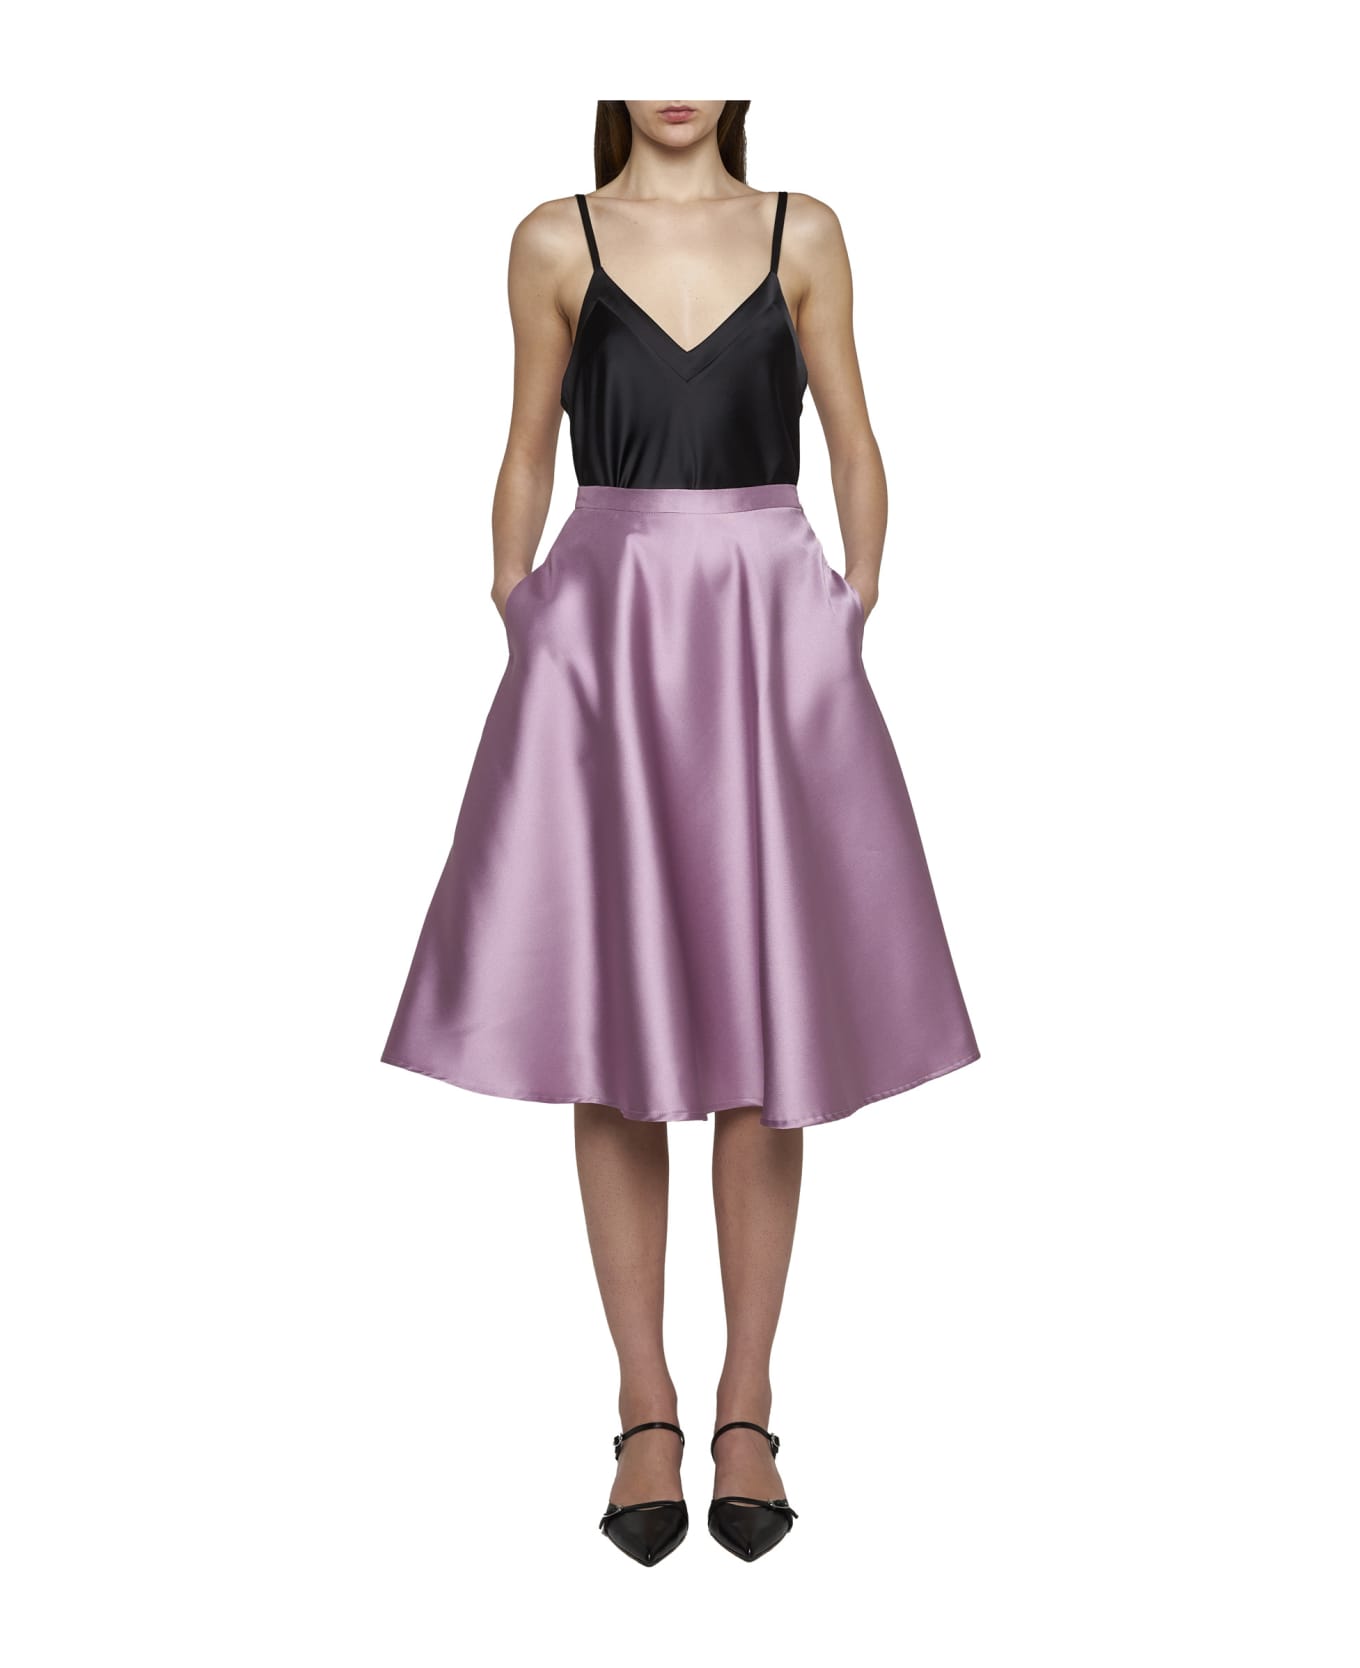 Blanca Vita Skirt - Lilac スカート